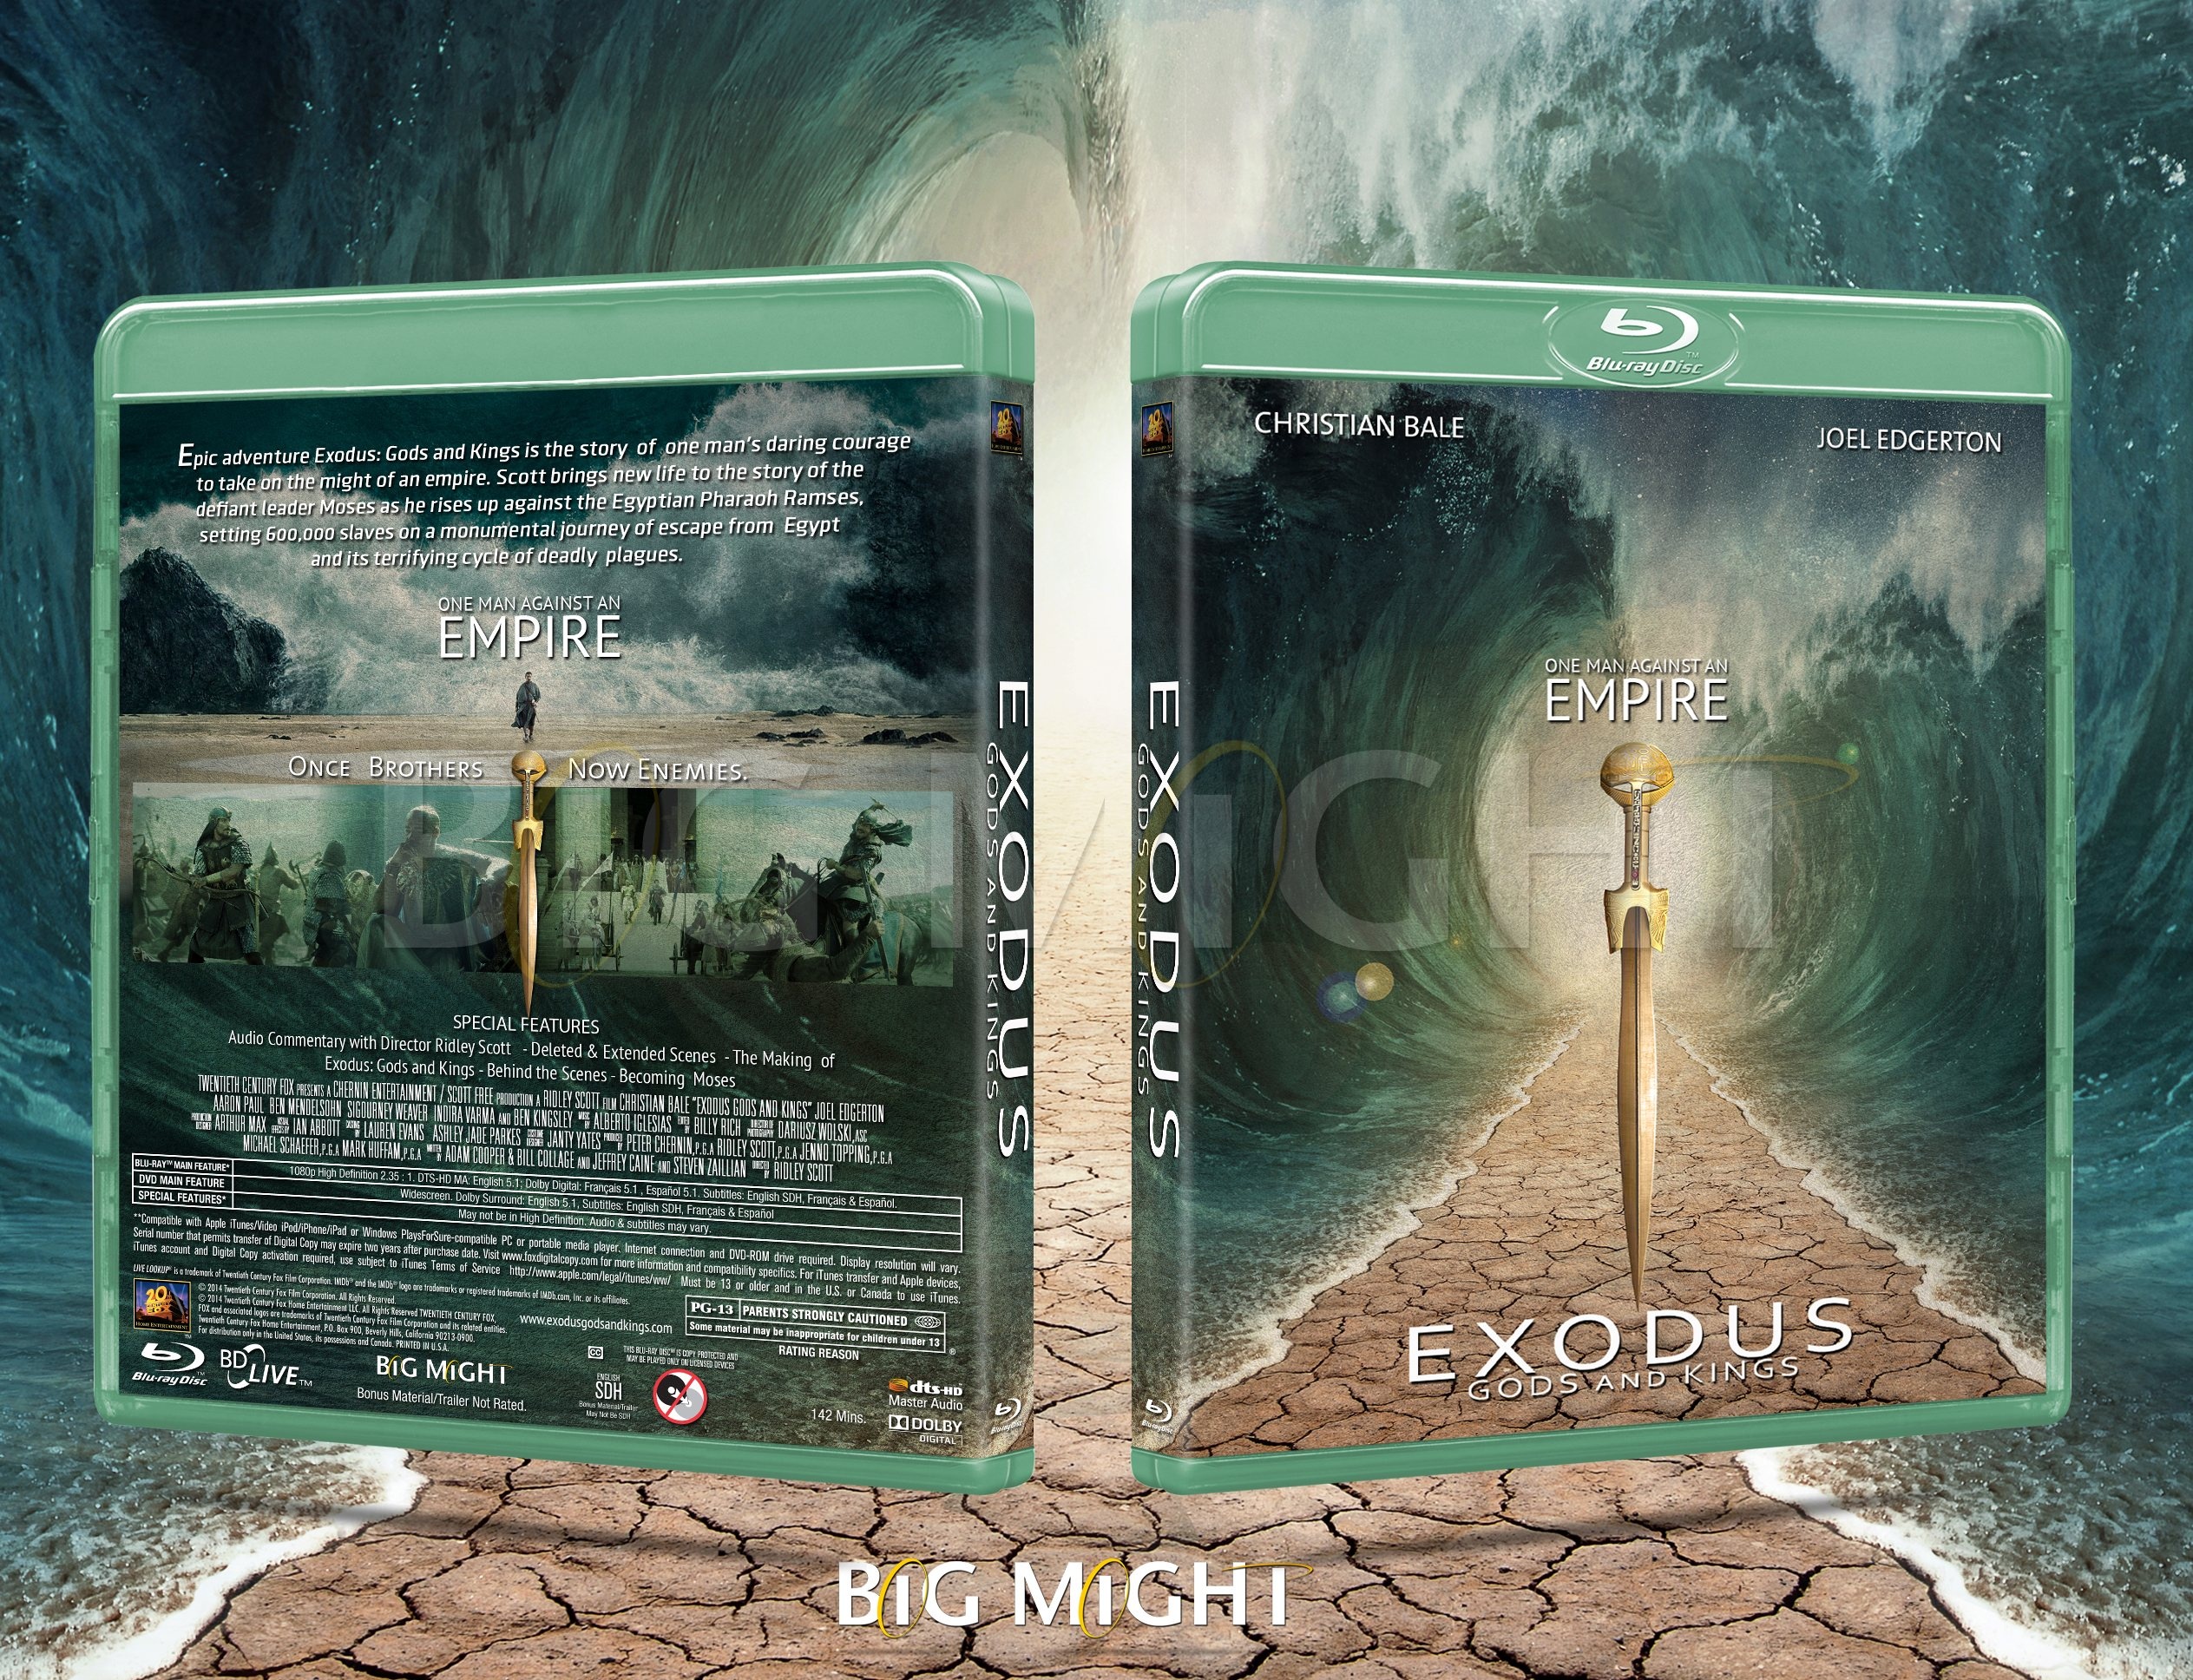 Exodus Gods and Kings V2 box cover